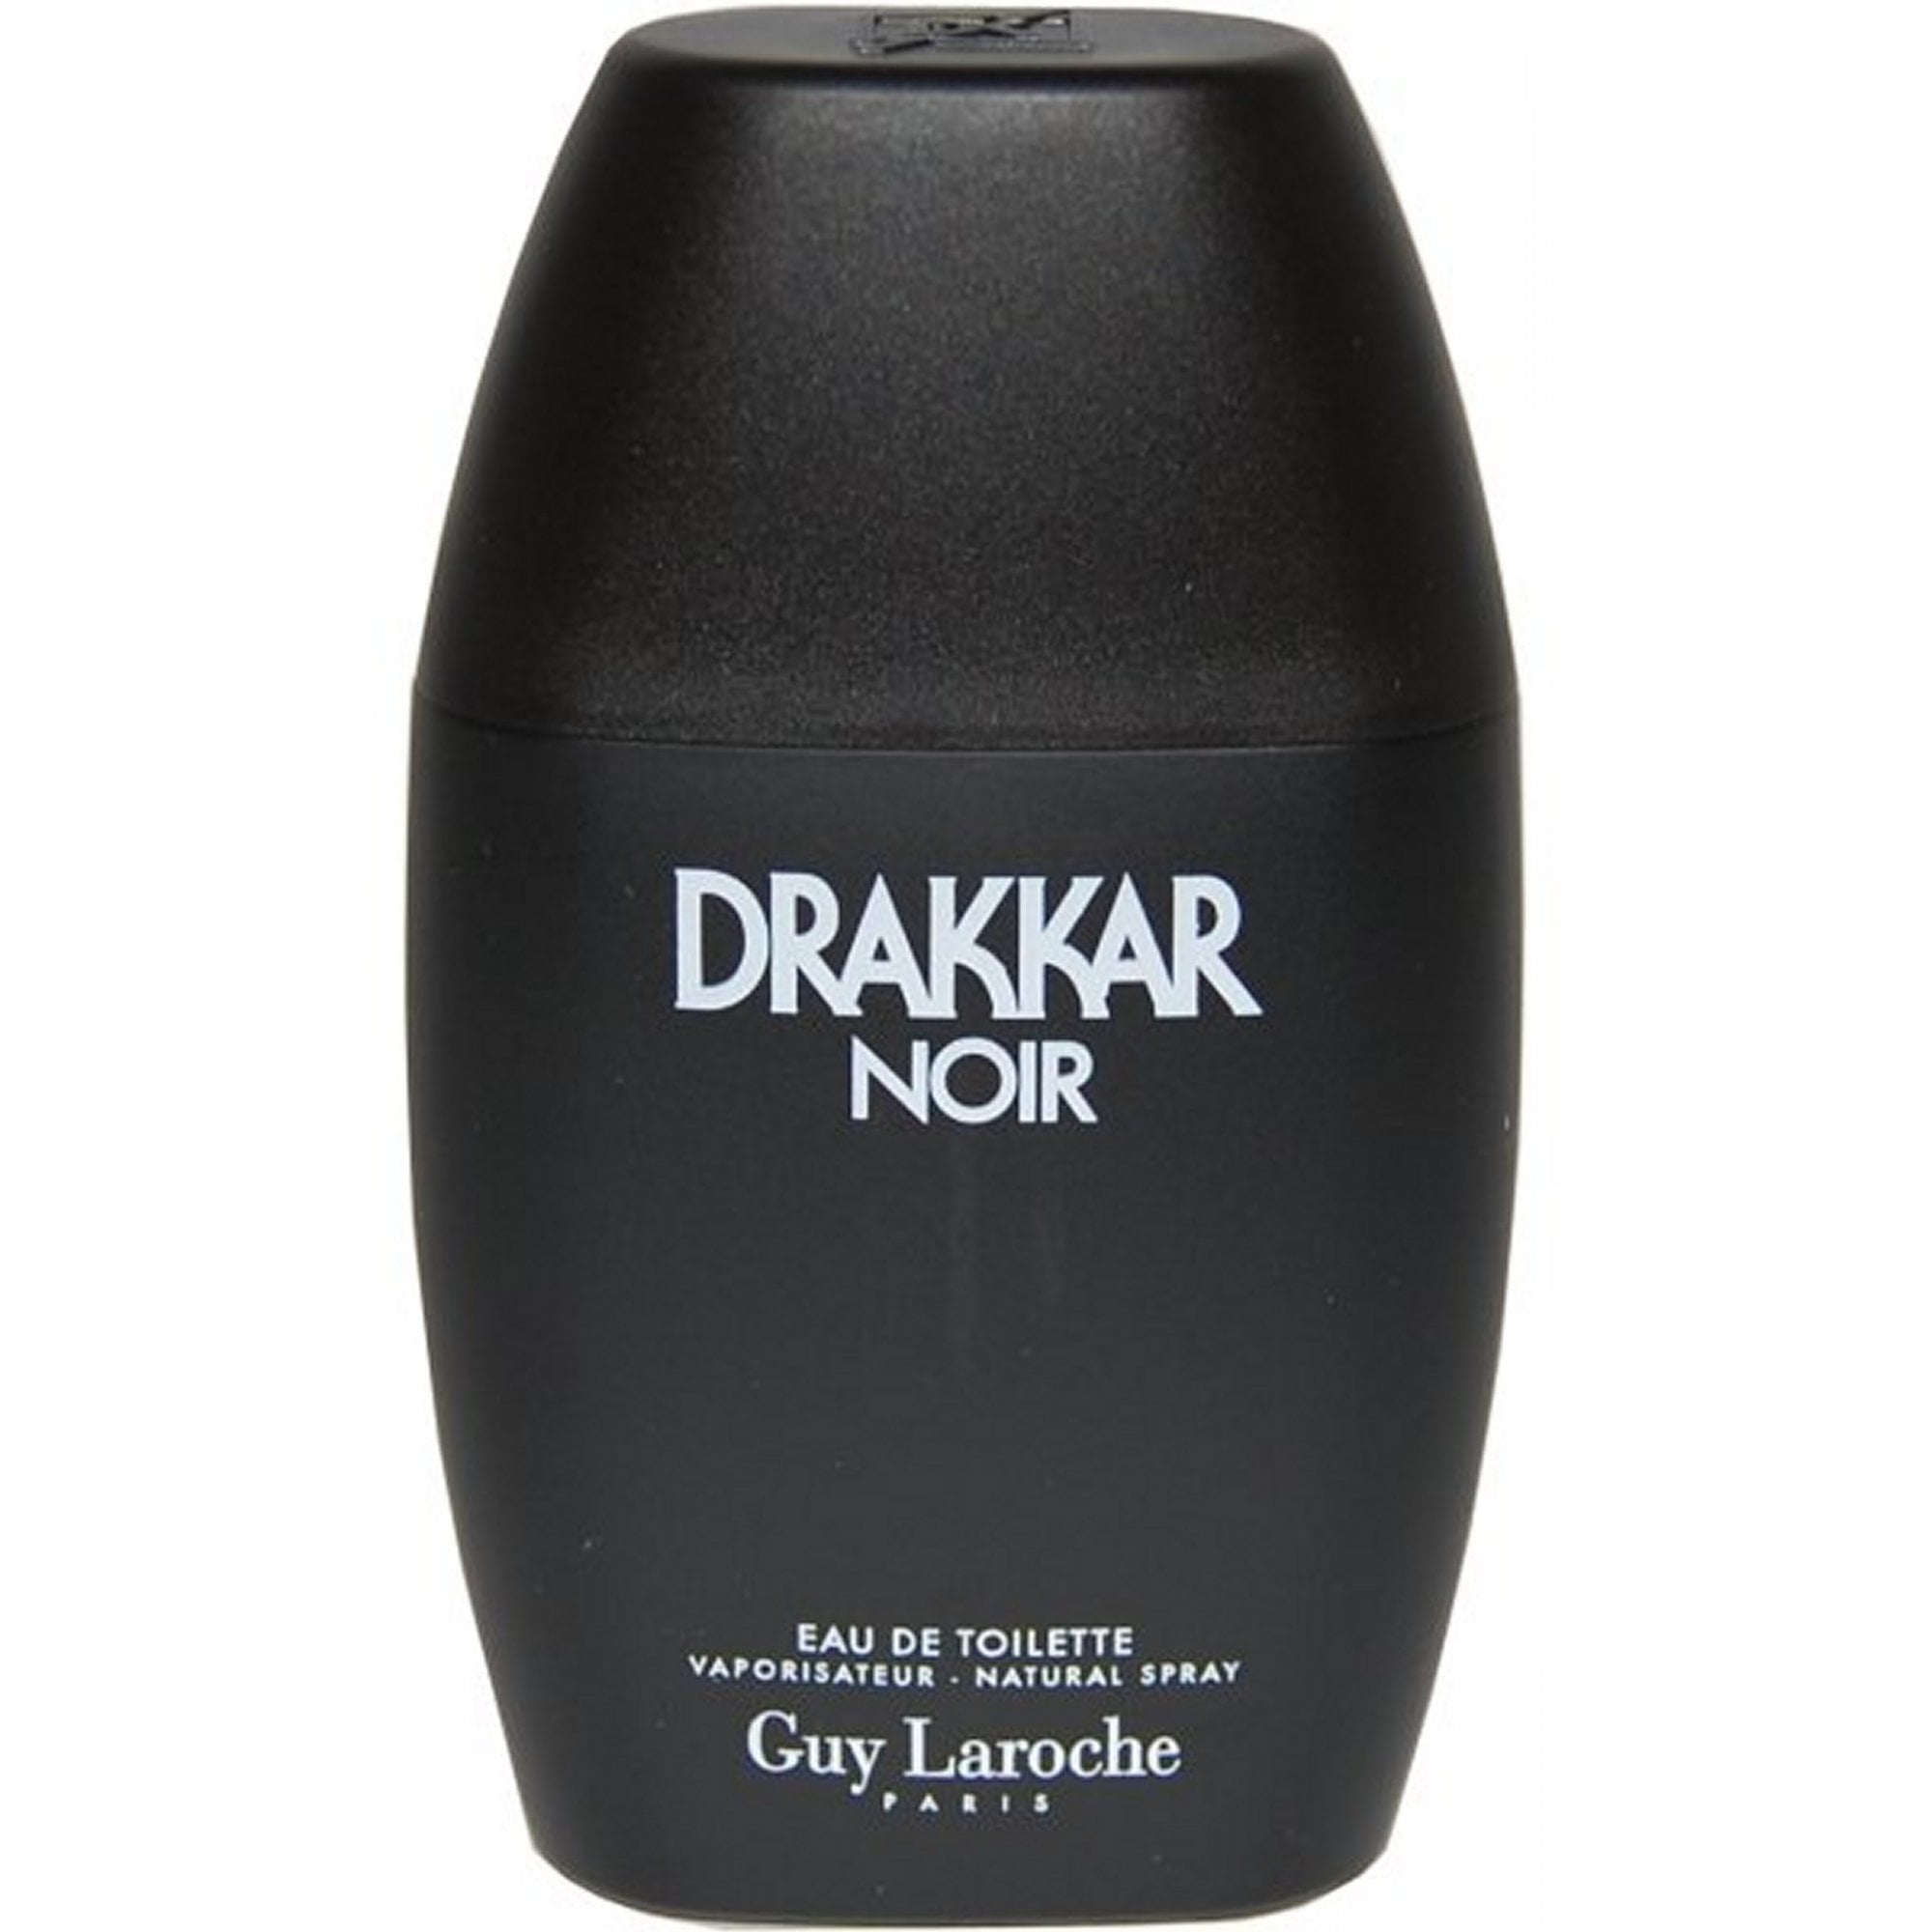 Tester - Drakkar Noir M 100ml Tester (with cap)